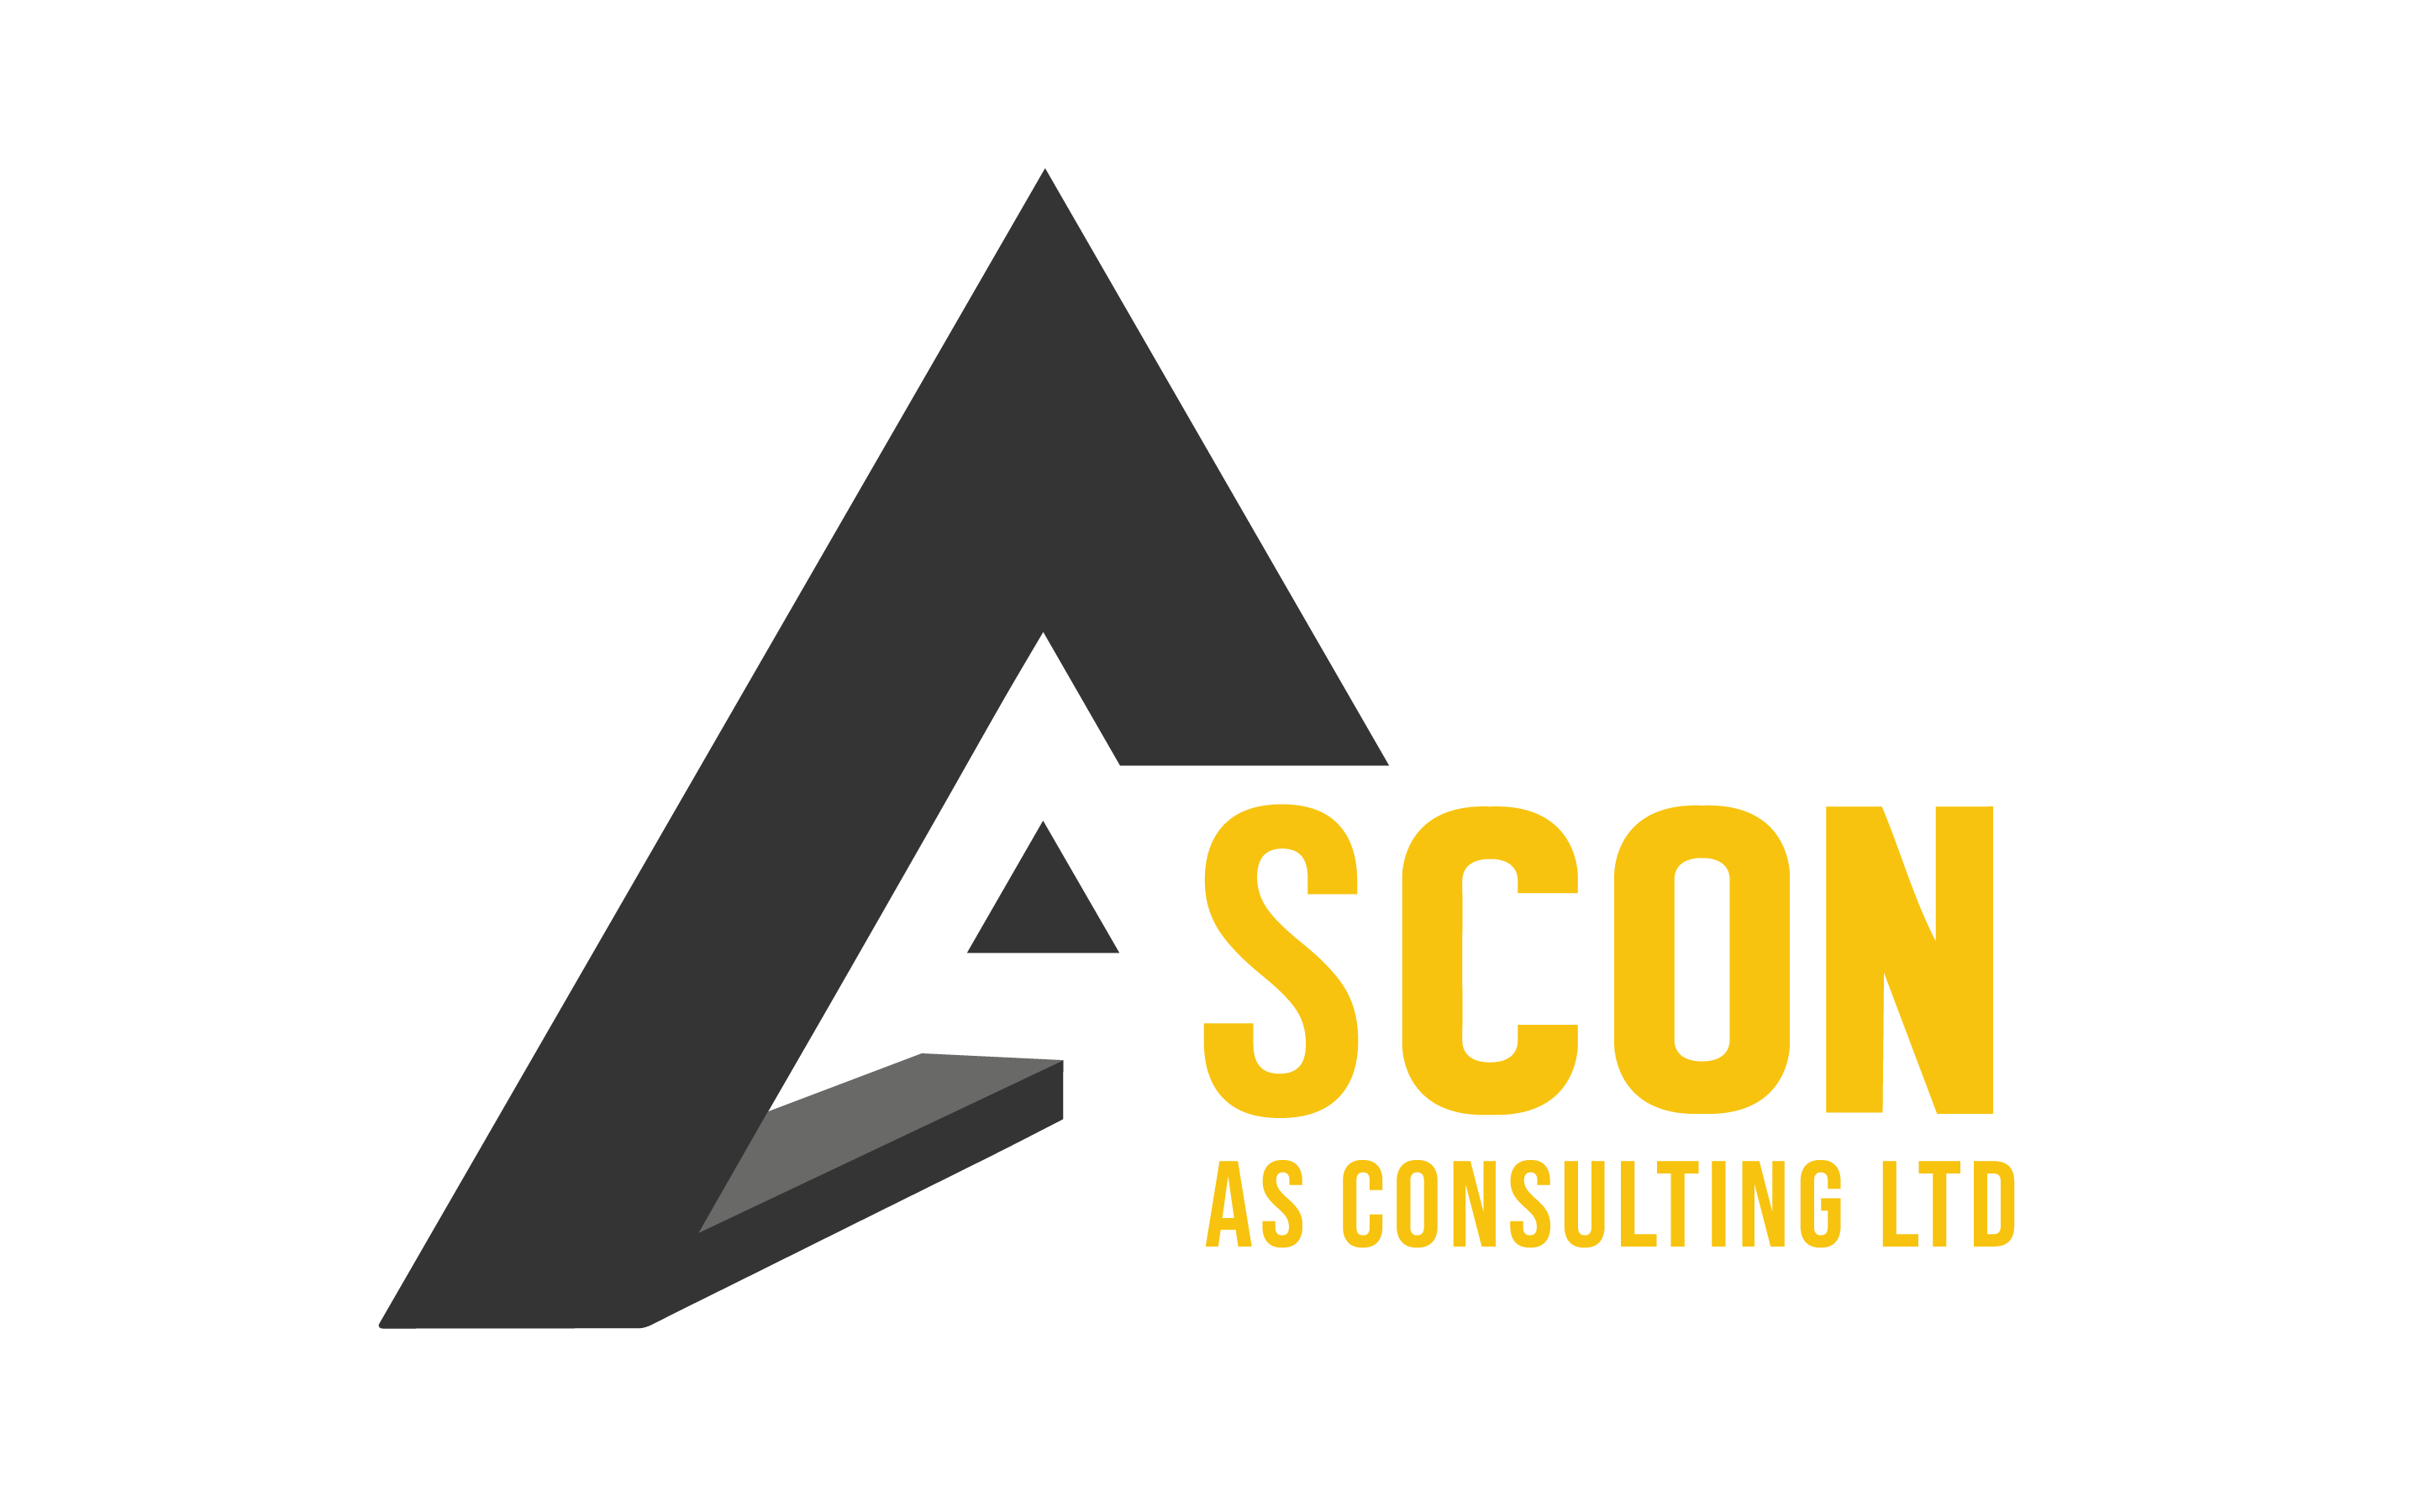 Ascon Ltd